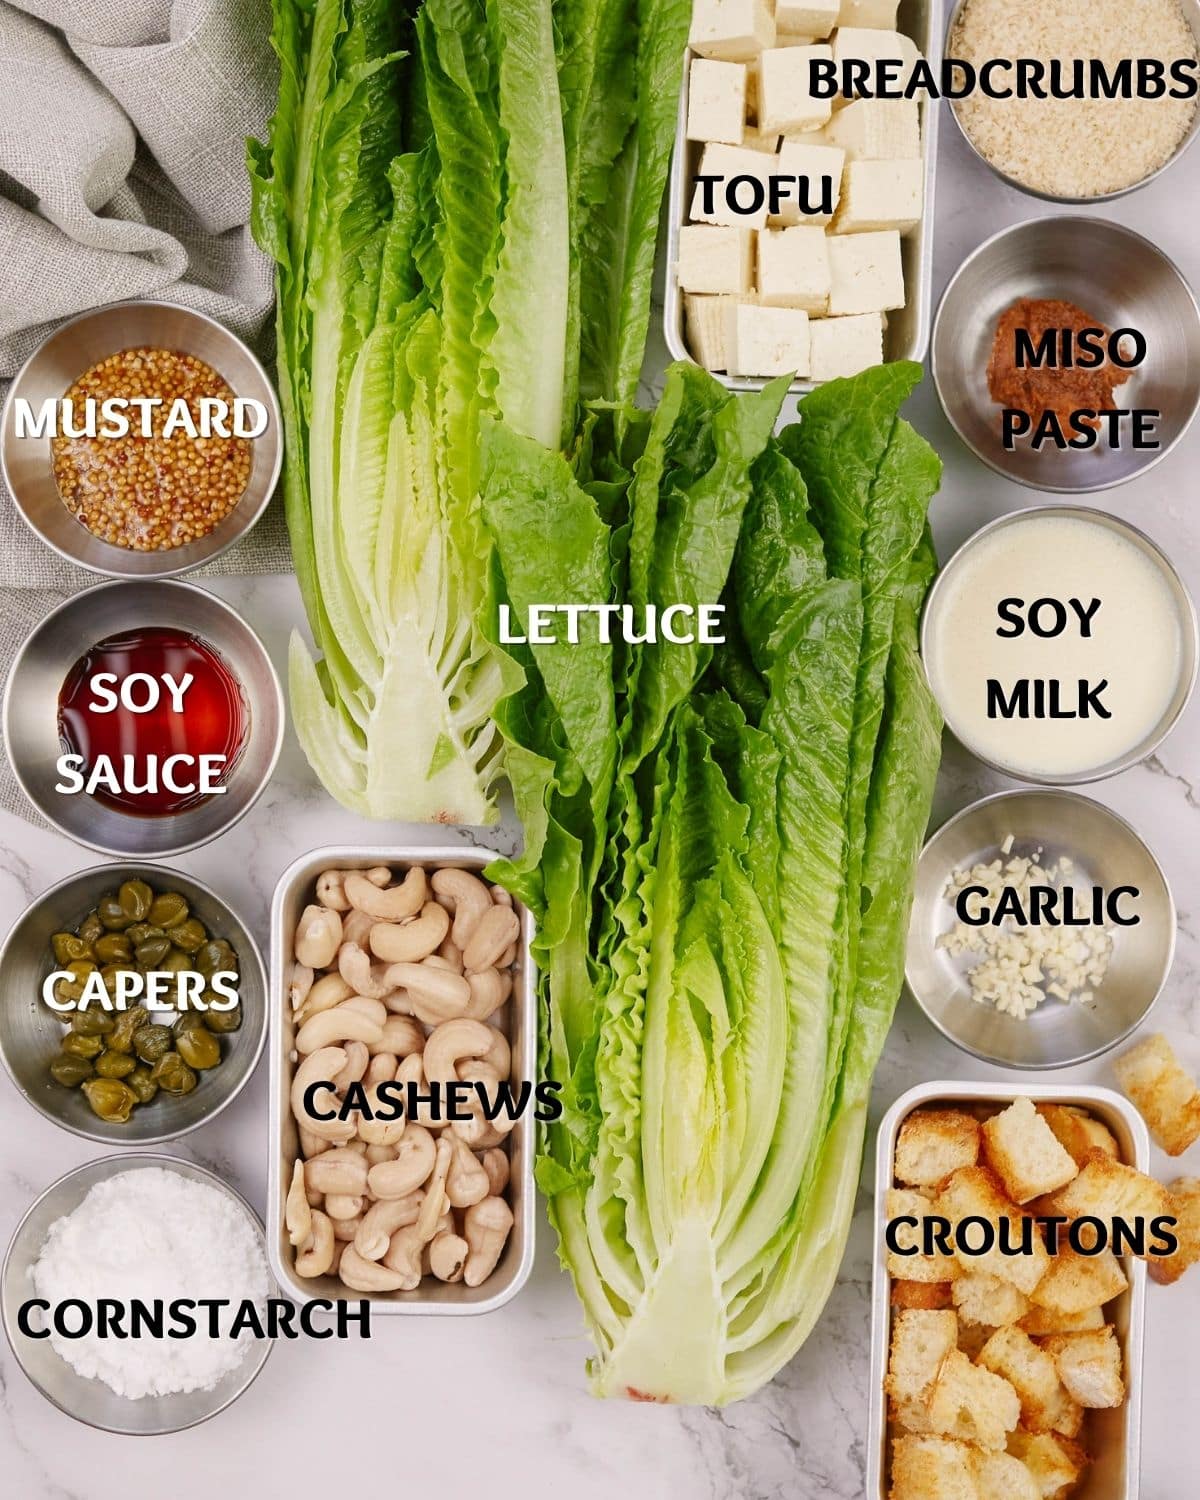 ingredients in ramekins on table next to romaine lettuce